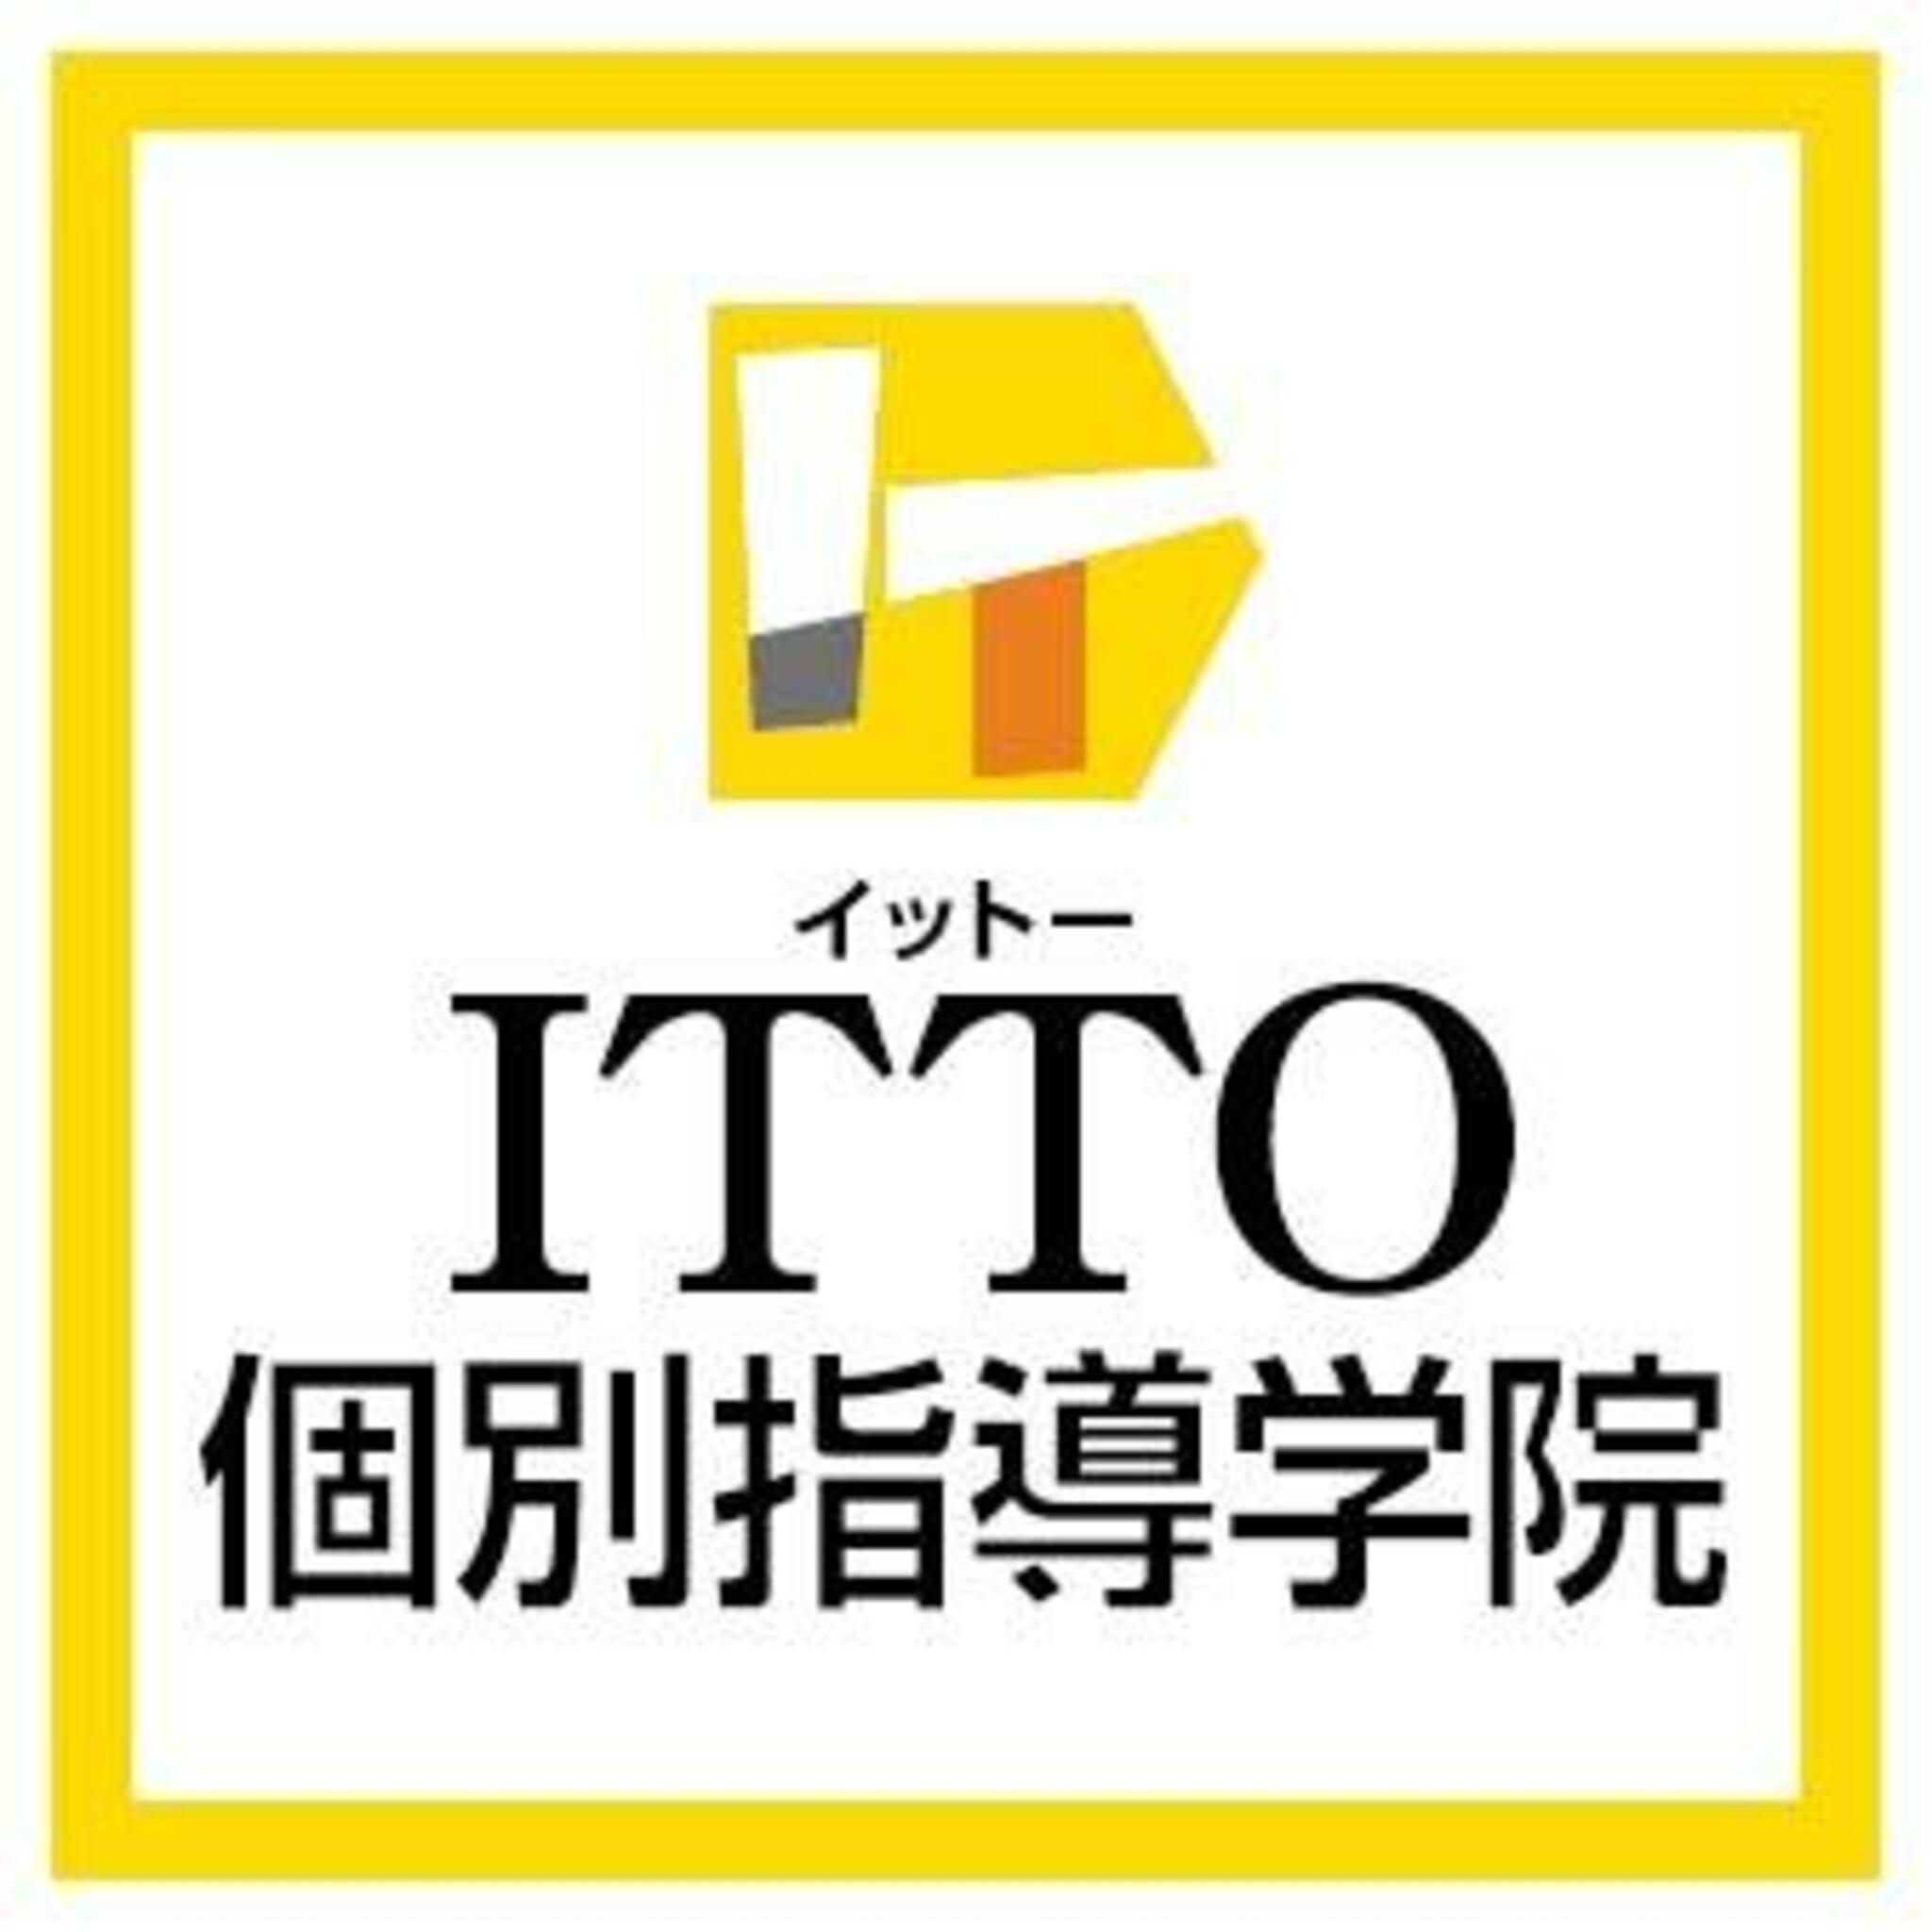 ITTO個別指導学院 十和田校の代表写真9